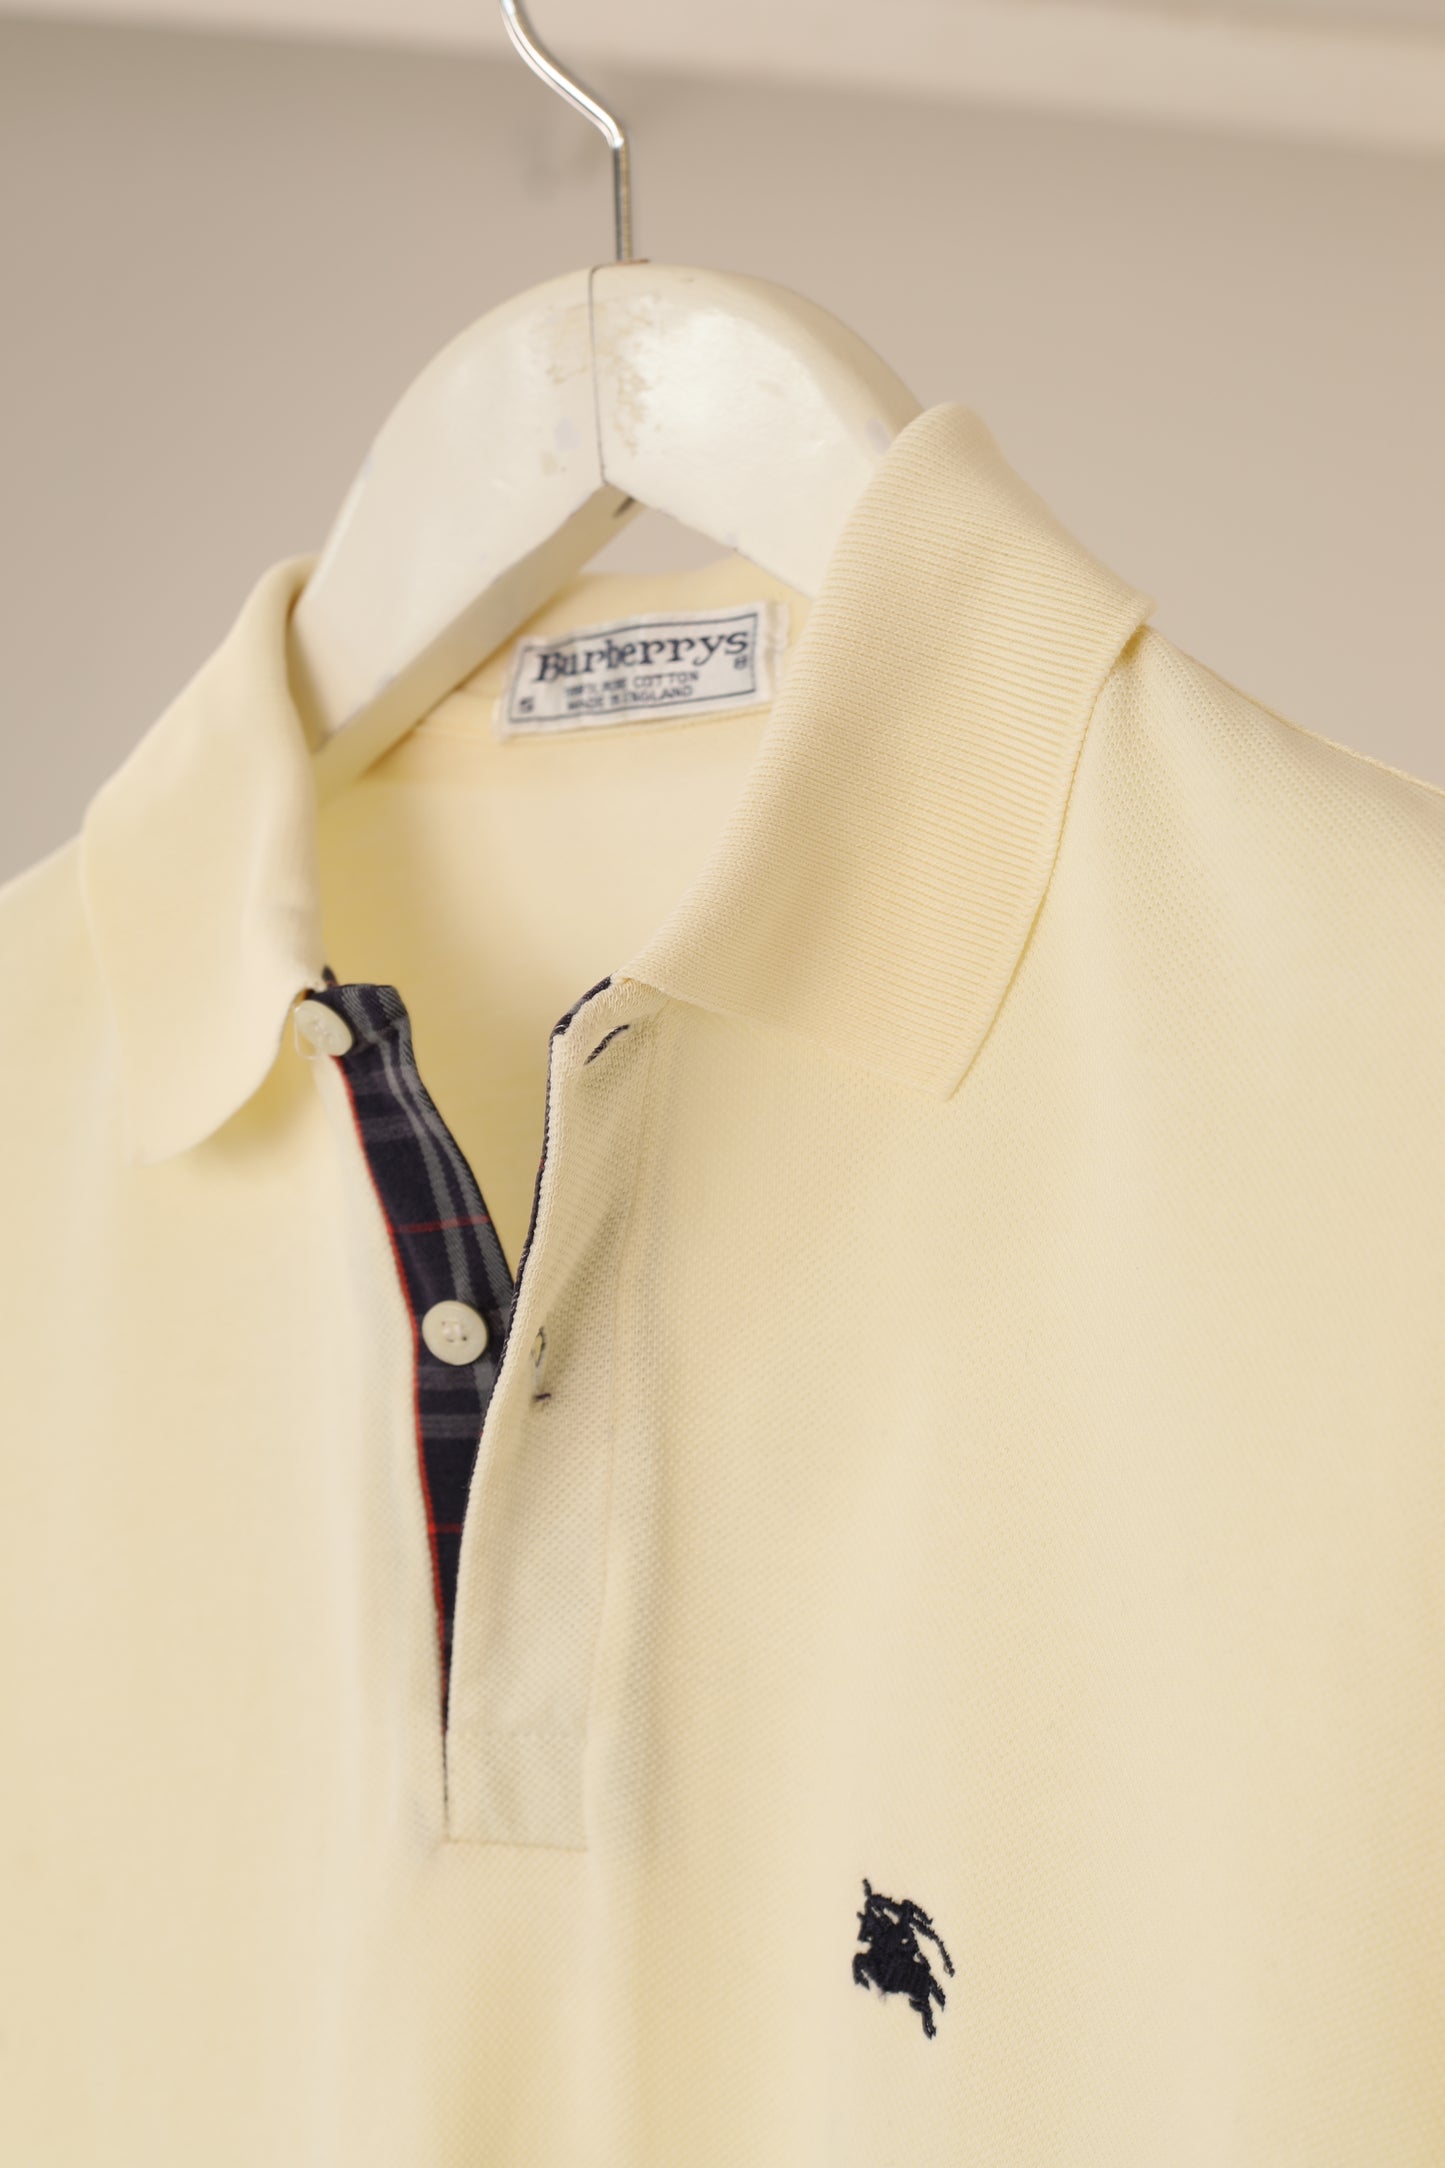 Vintage Burberry's of London polo shirt